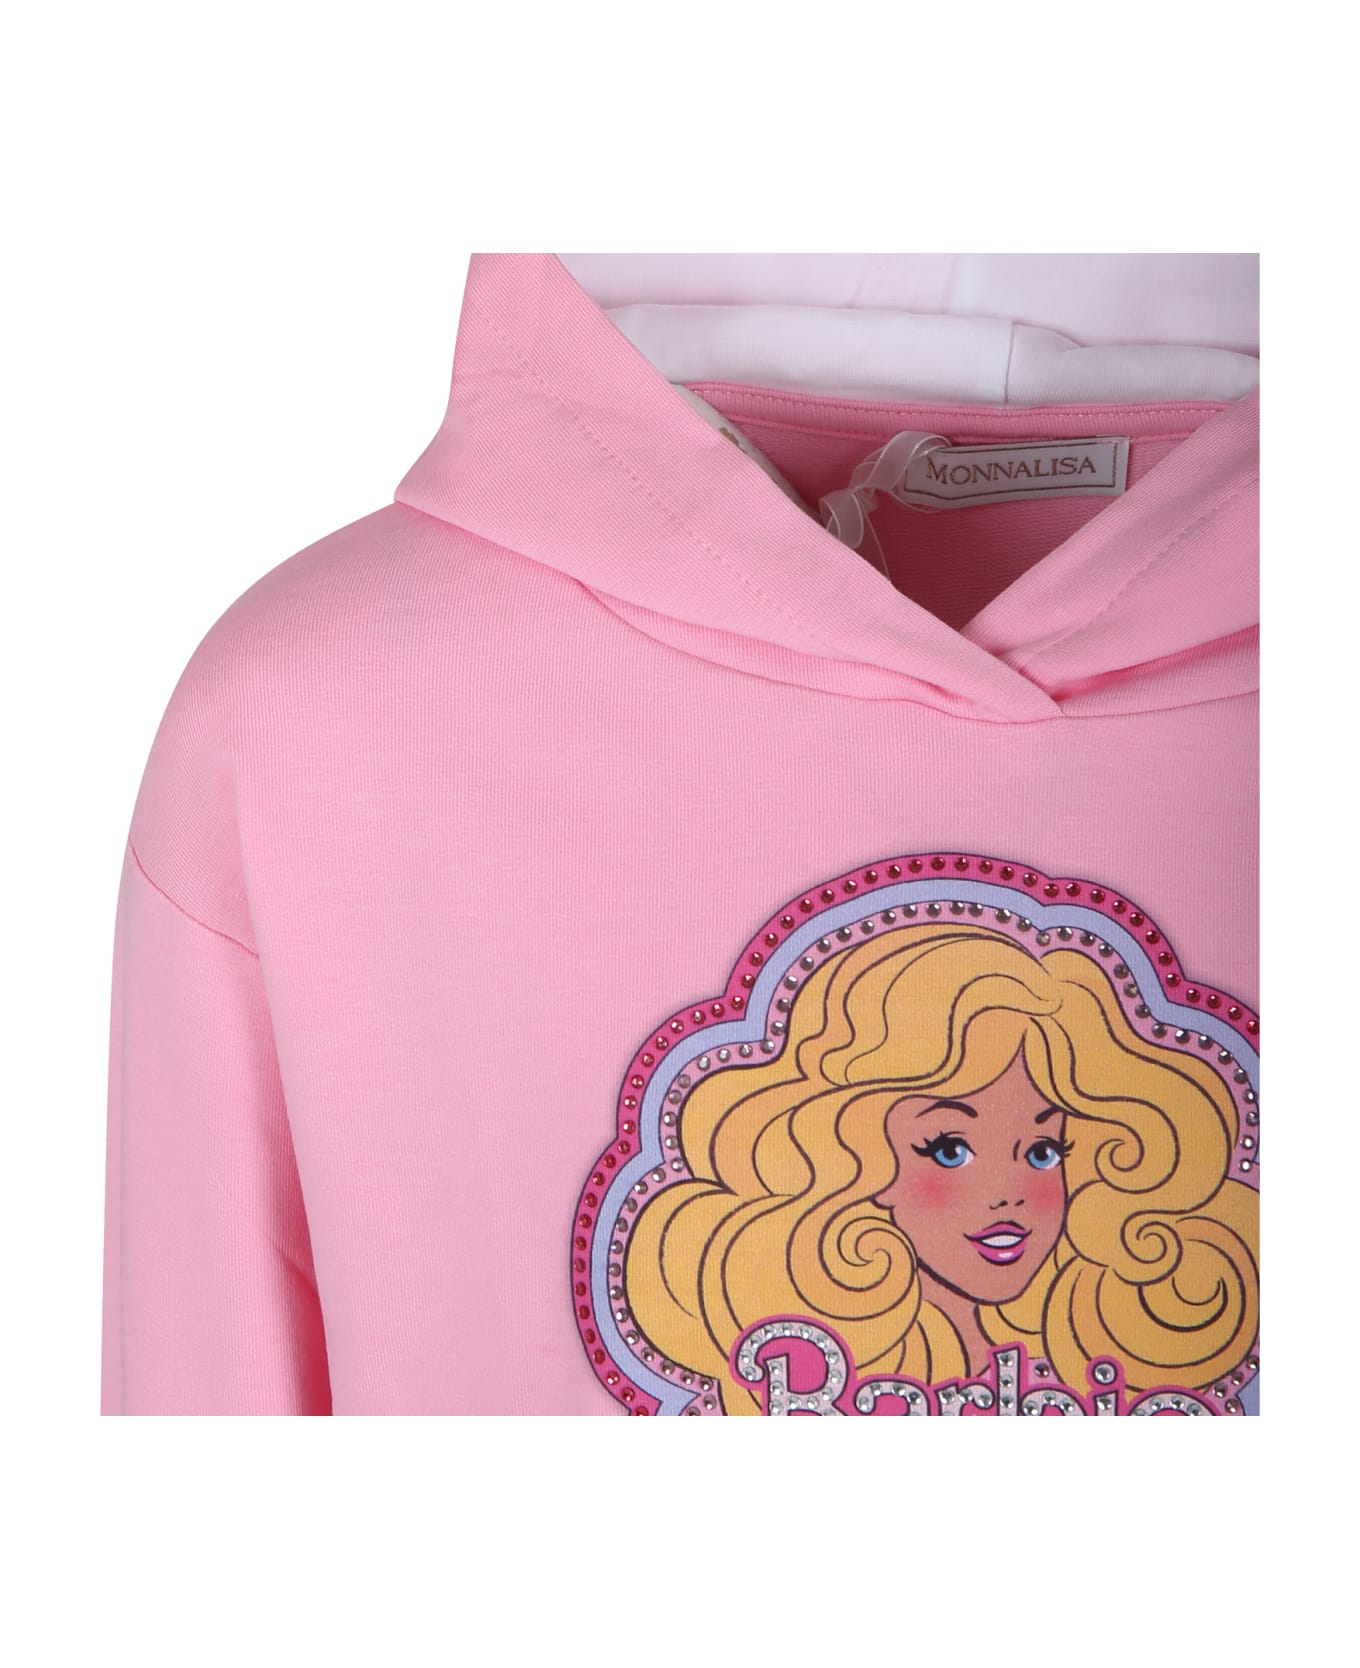 Monnalisa Pink Sweatshirt For Girl With Barbie Print And Rhinestone - Pink